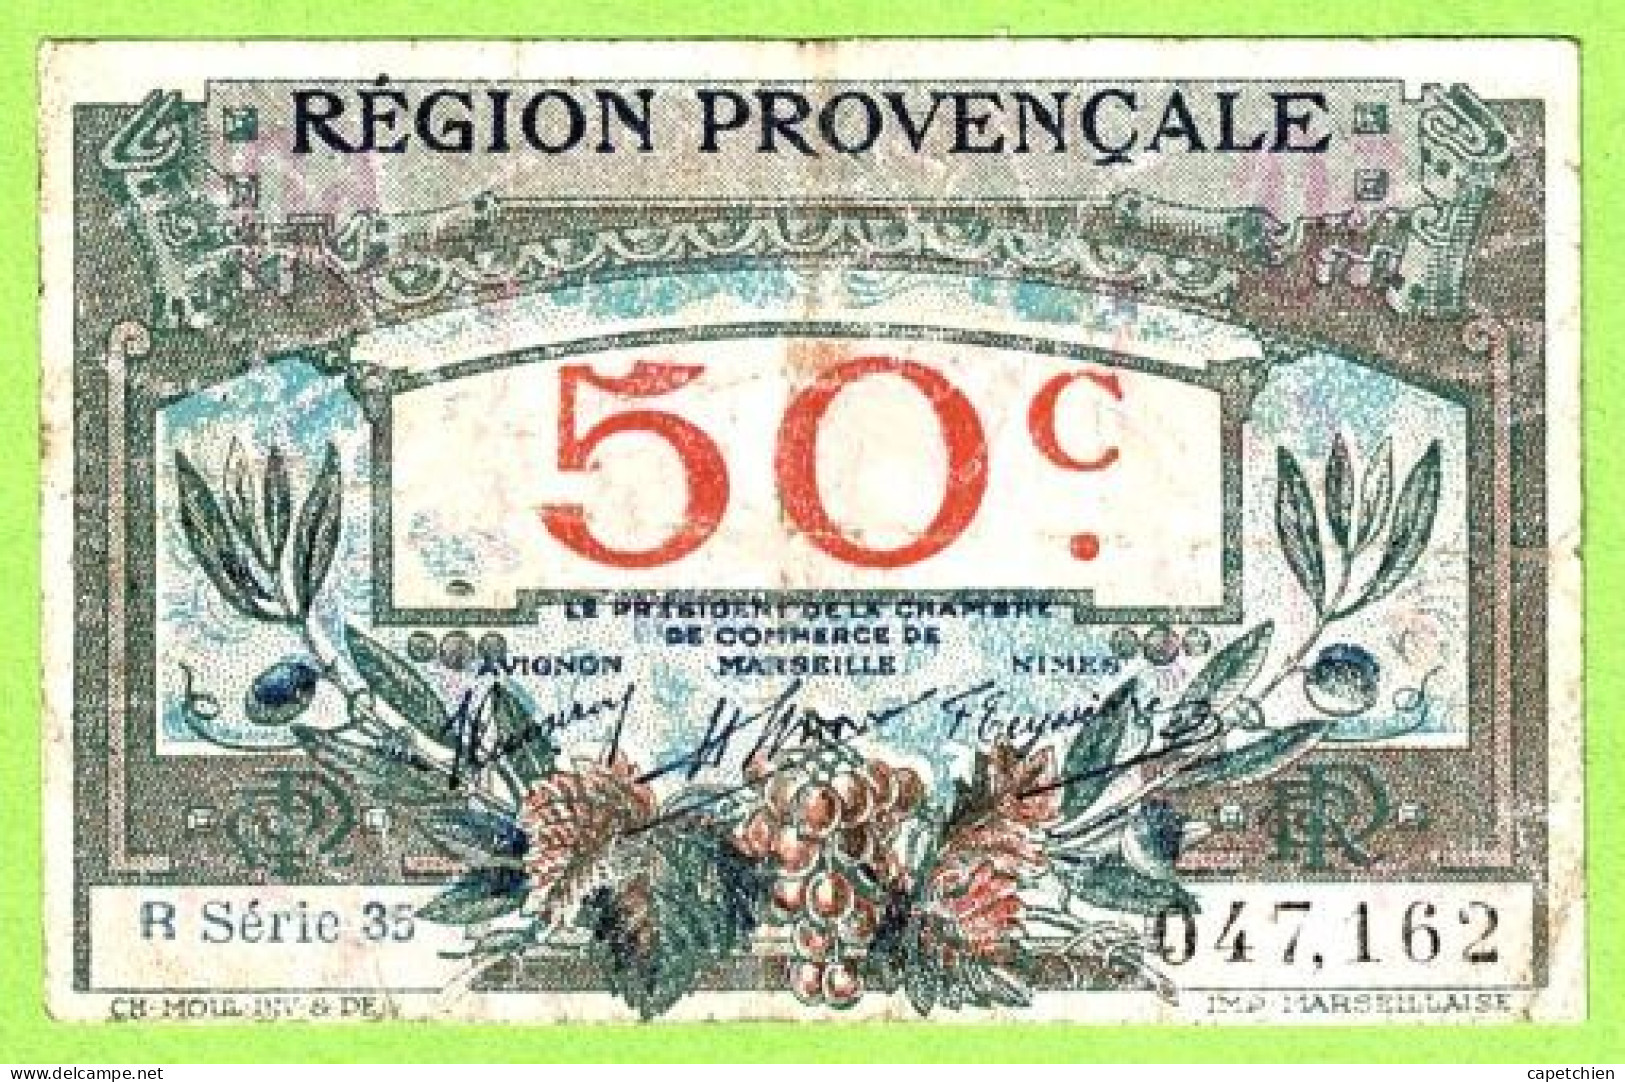 FRANCE / CHAMBRE De COMMERCE / REGION PROVENCALE / 50 CENTIMES / 047162 / R  SERIE 35 - Chamber Of Commerce